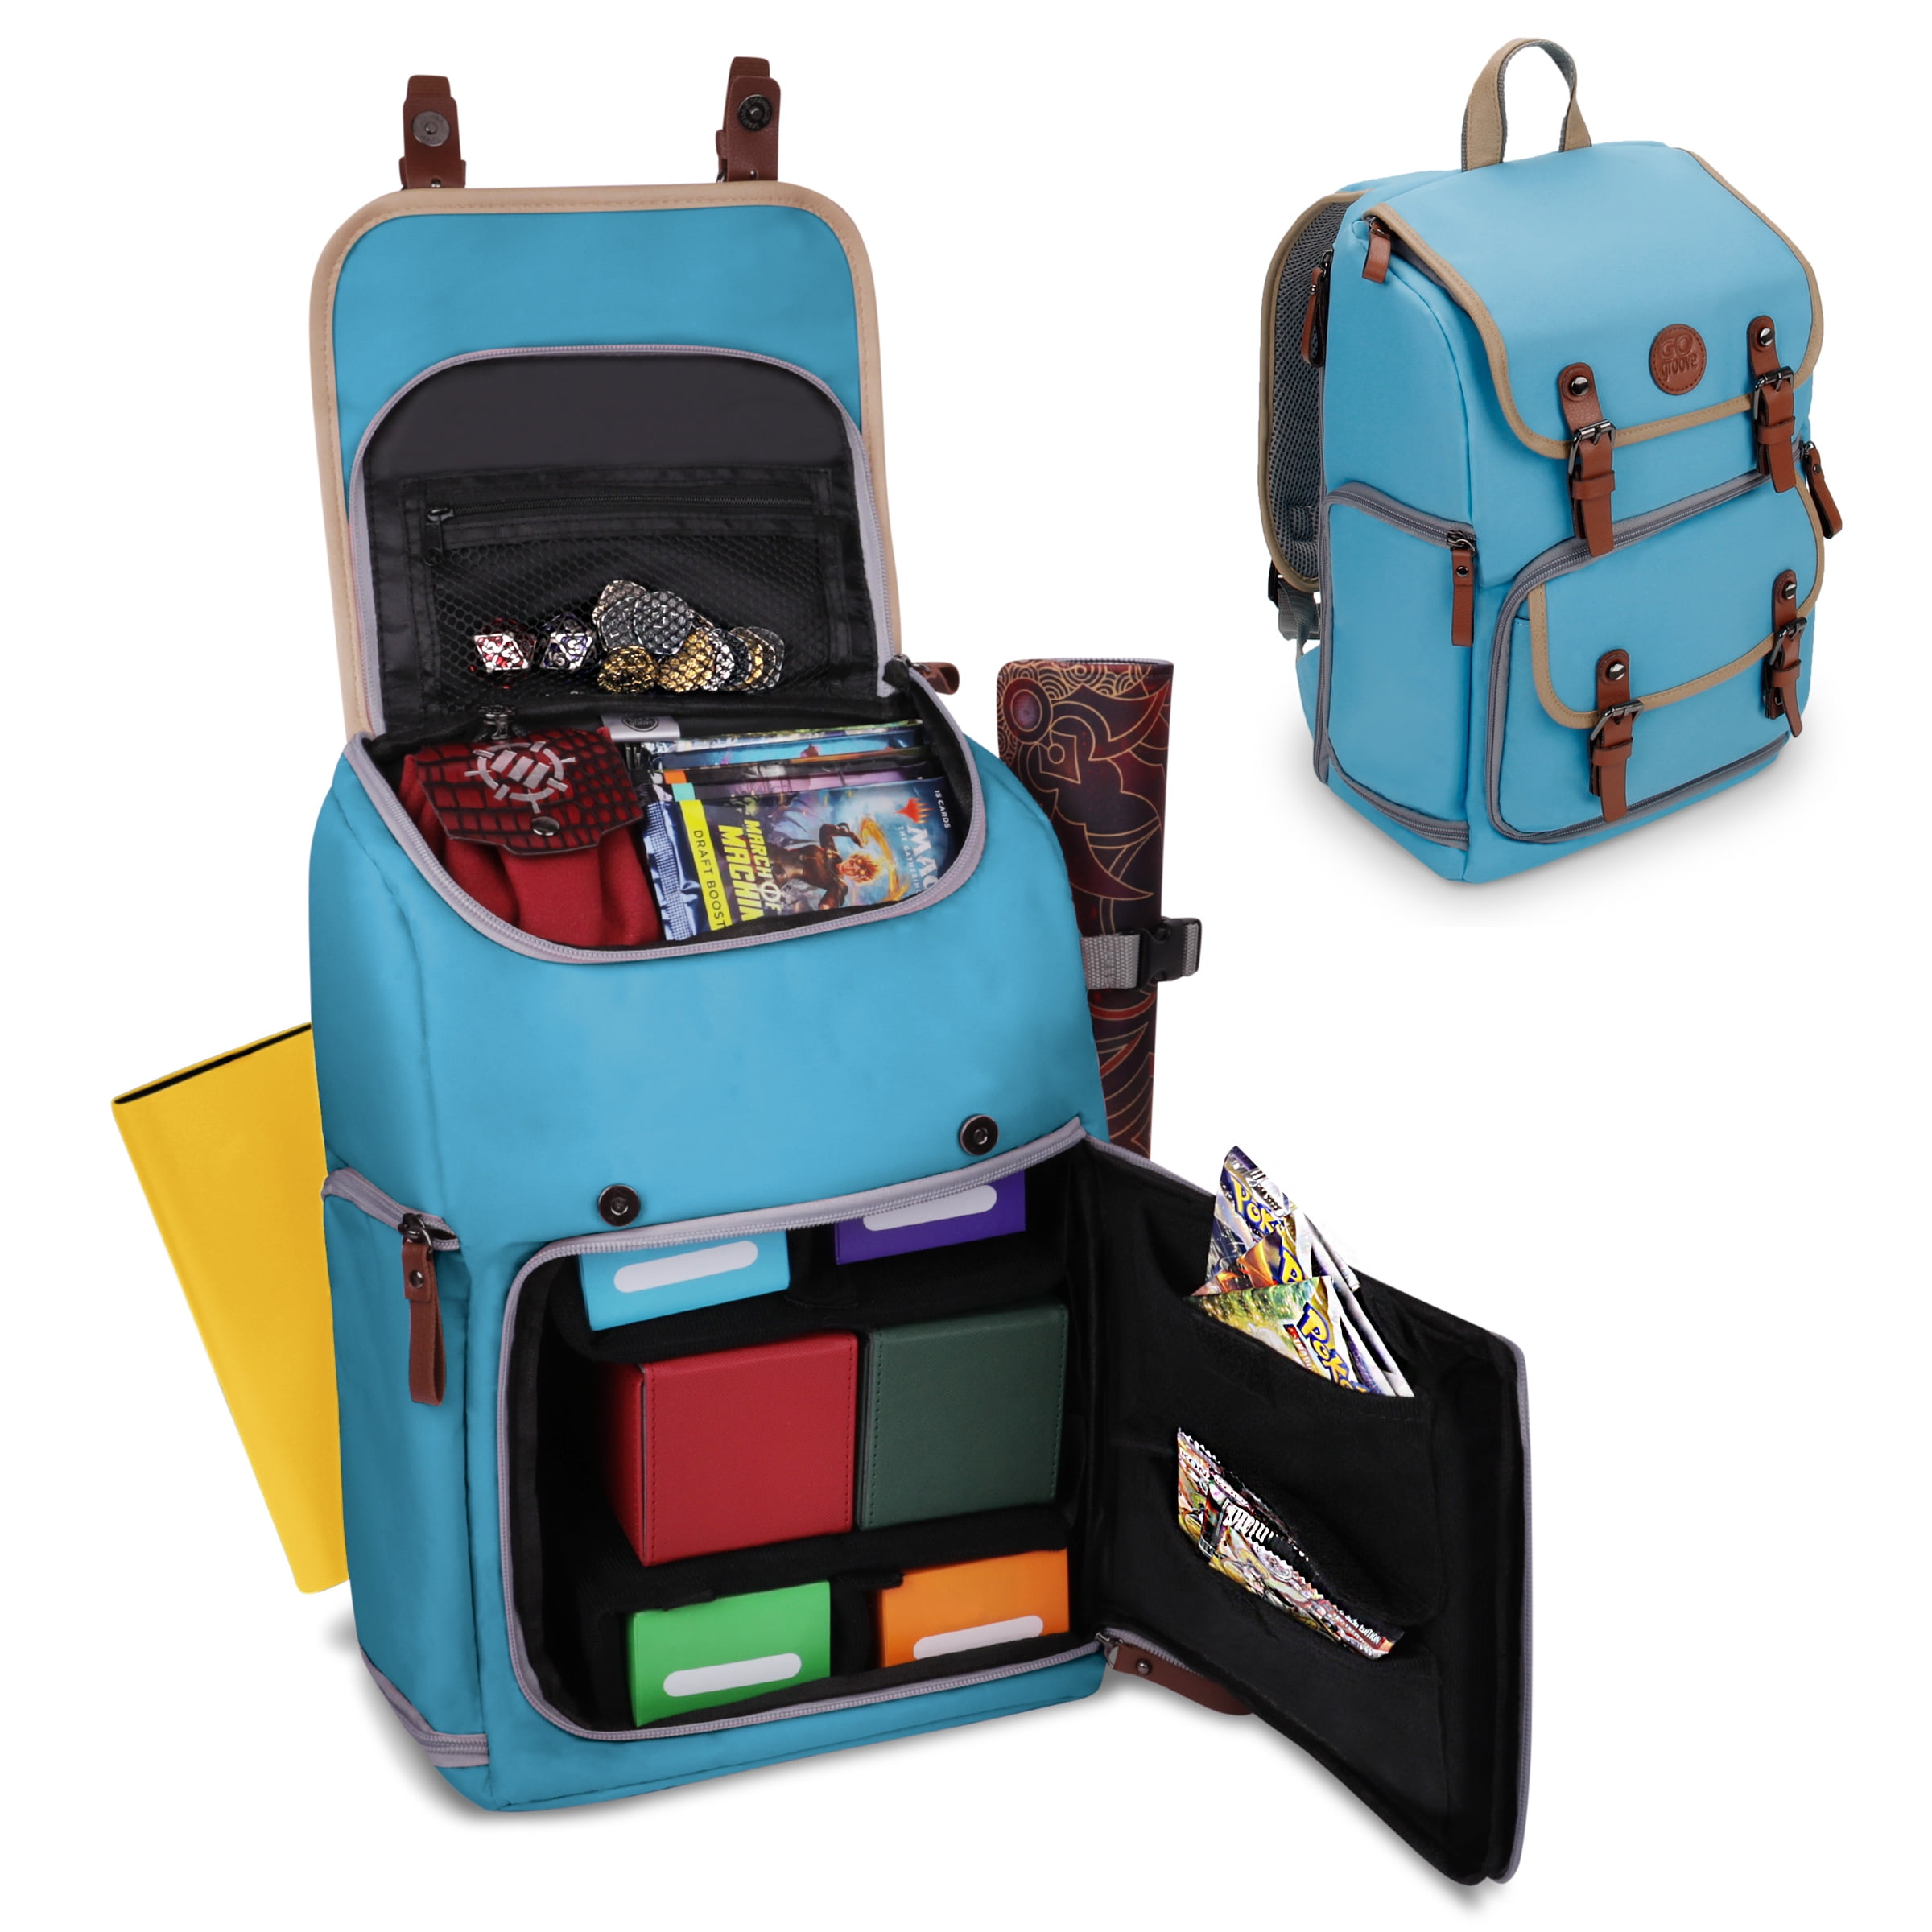 ENHANCE Card Storage Backpack: Full-size Red (Designer Edition) (Preorder)